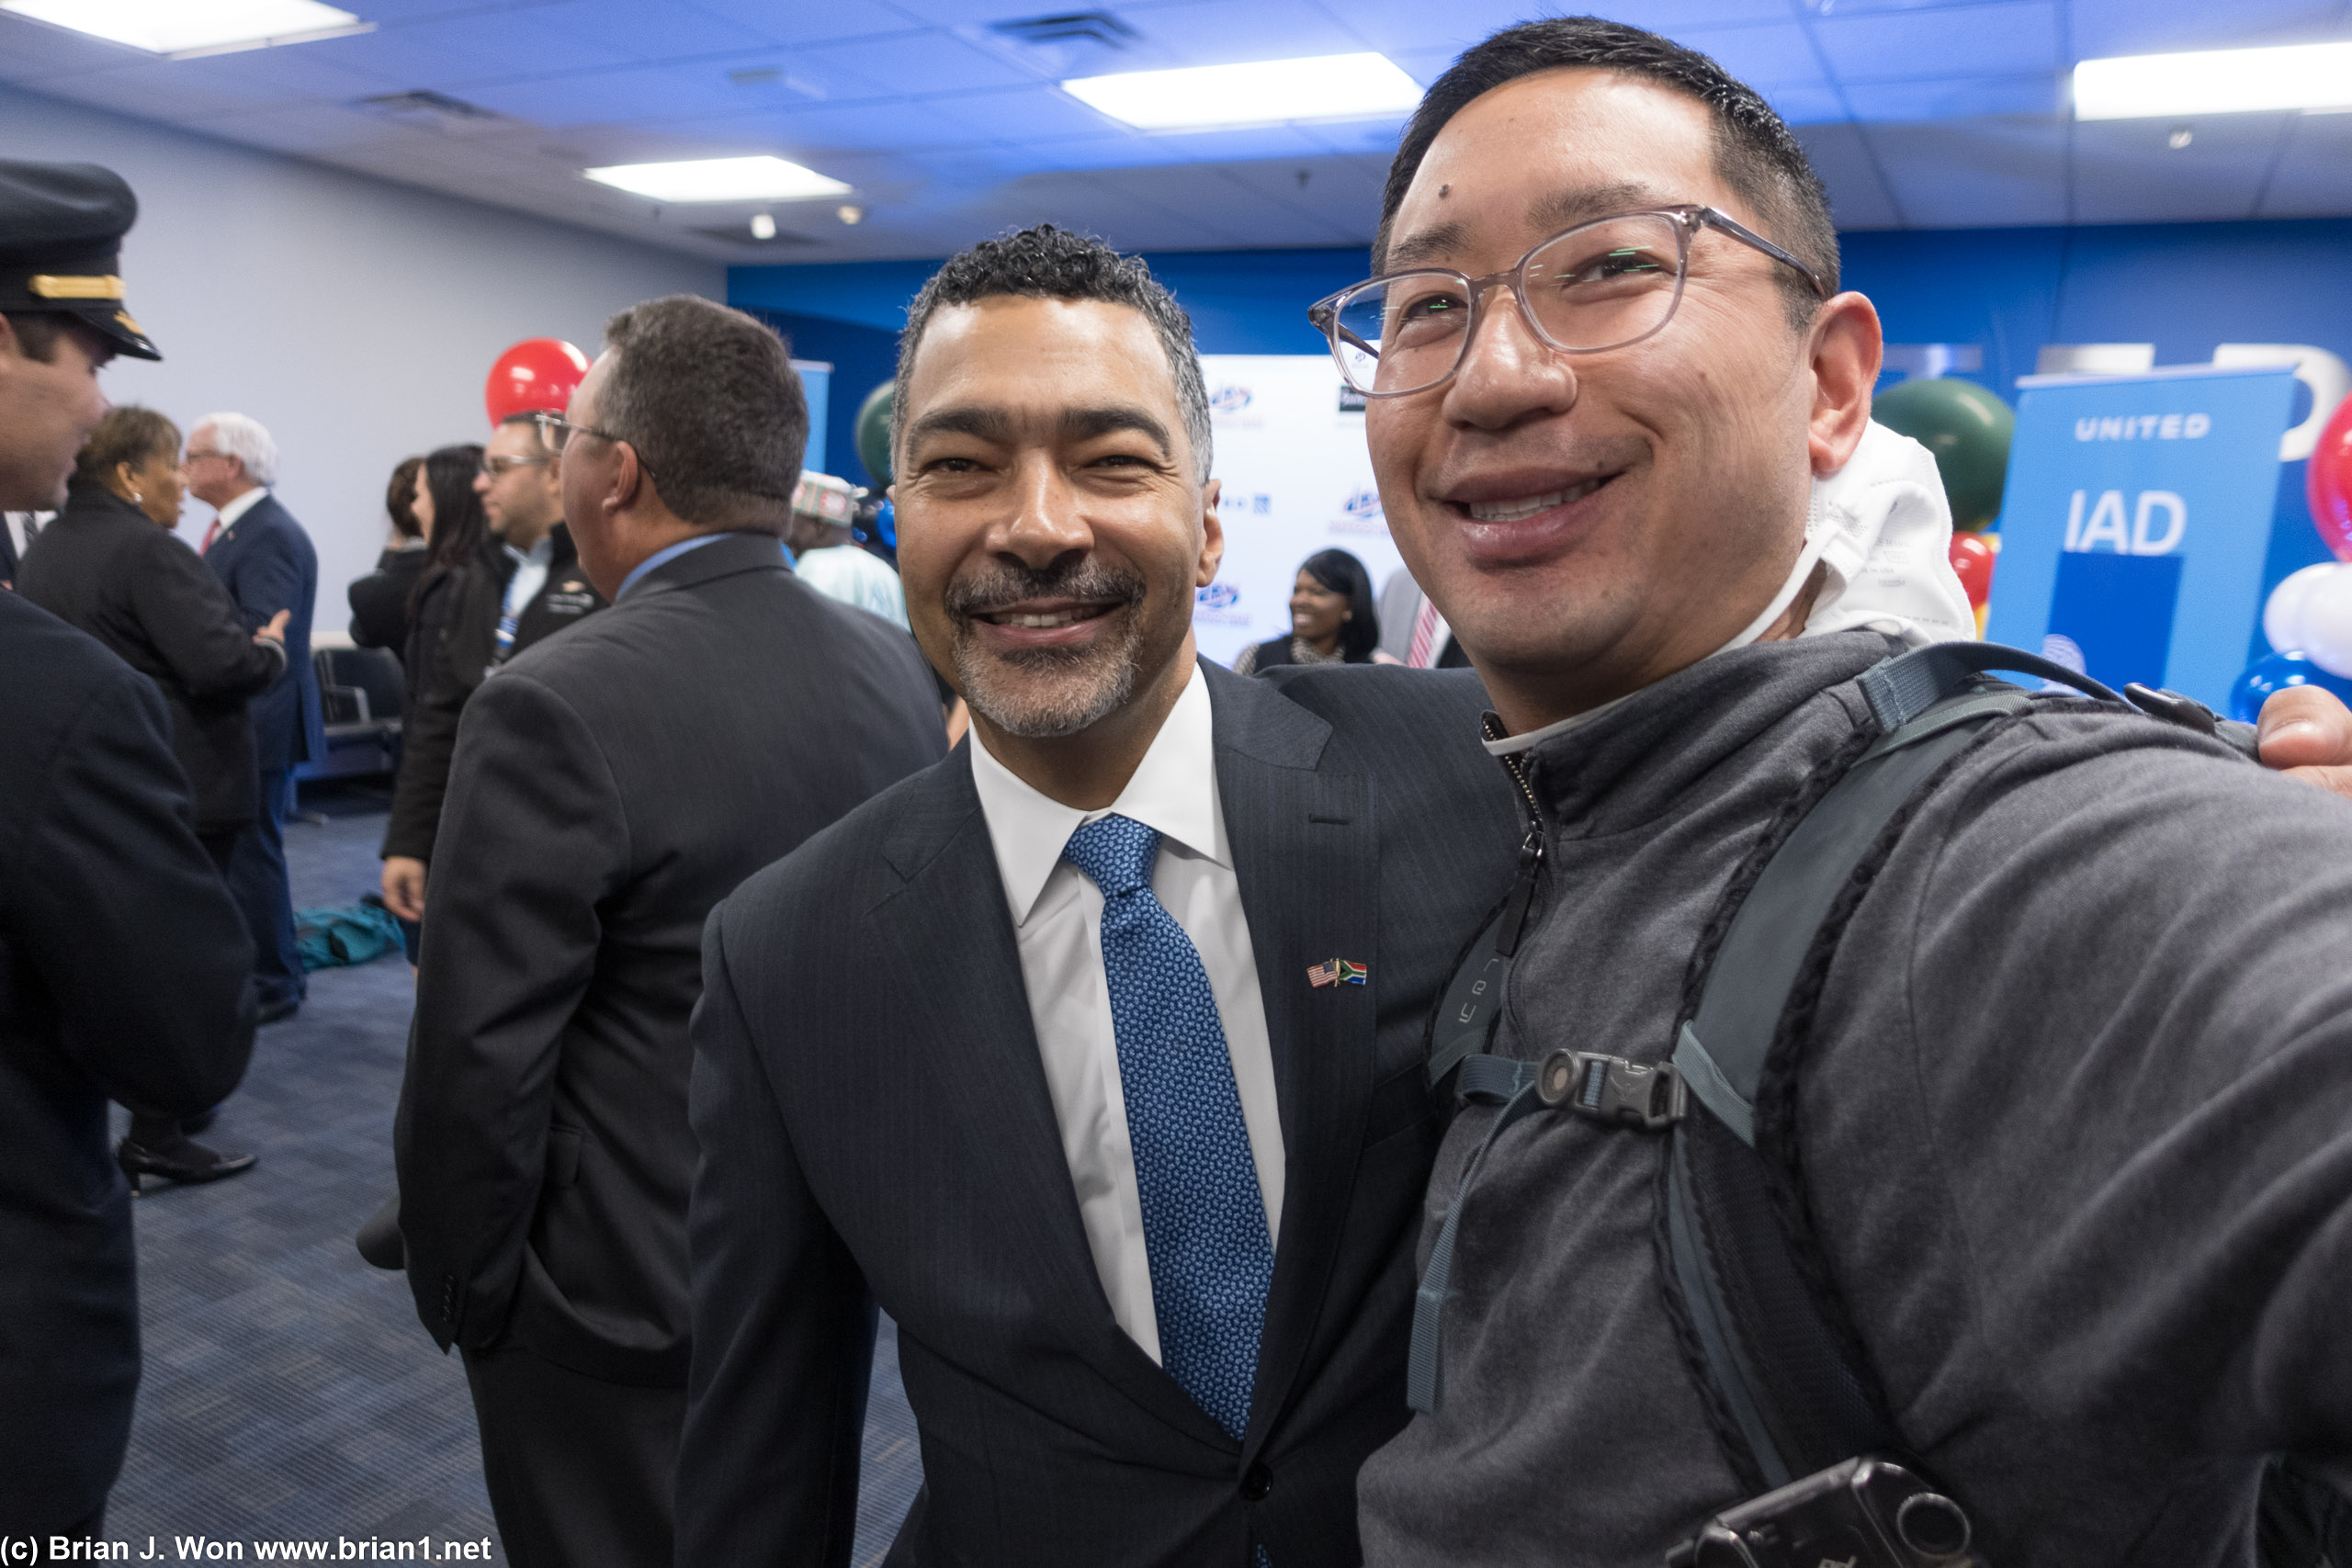 Selfie with the president of United Airlines, Brett Hart.